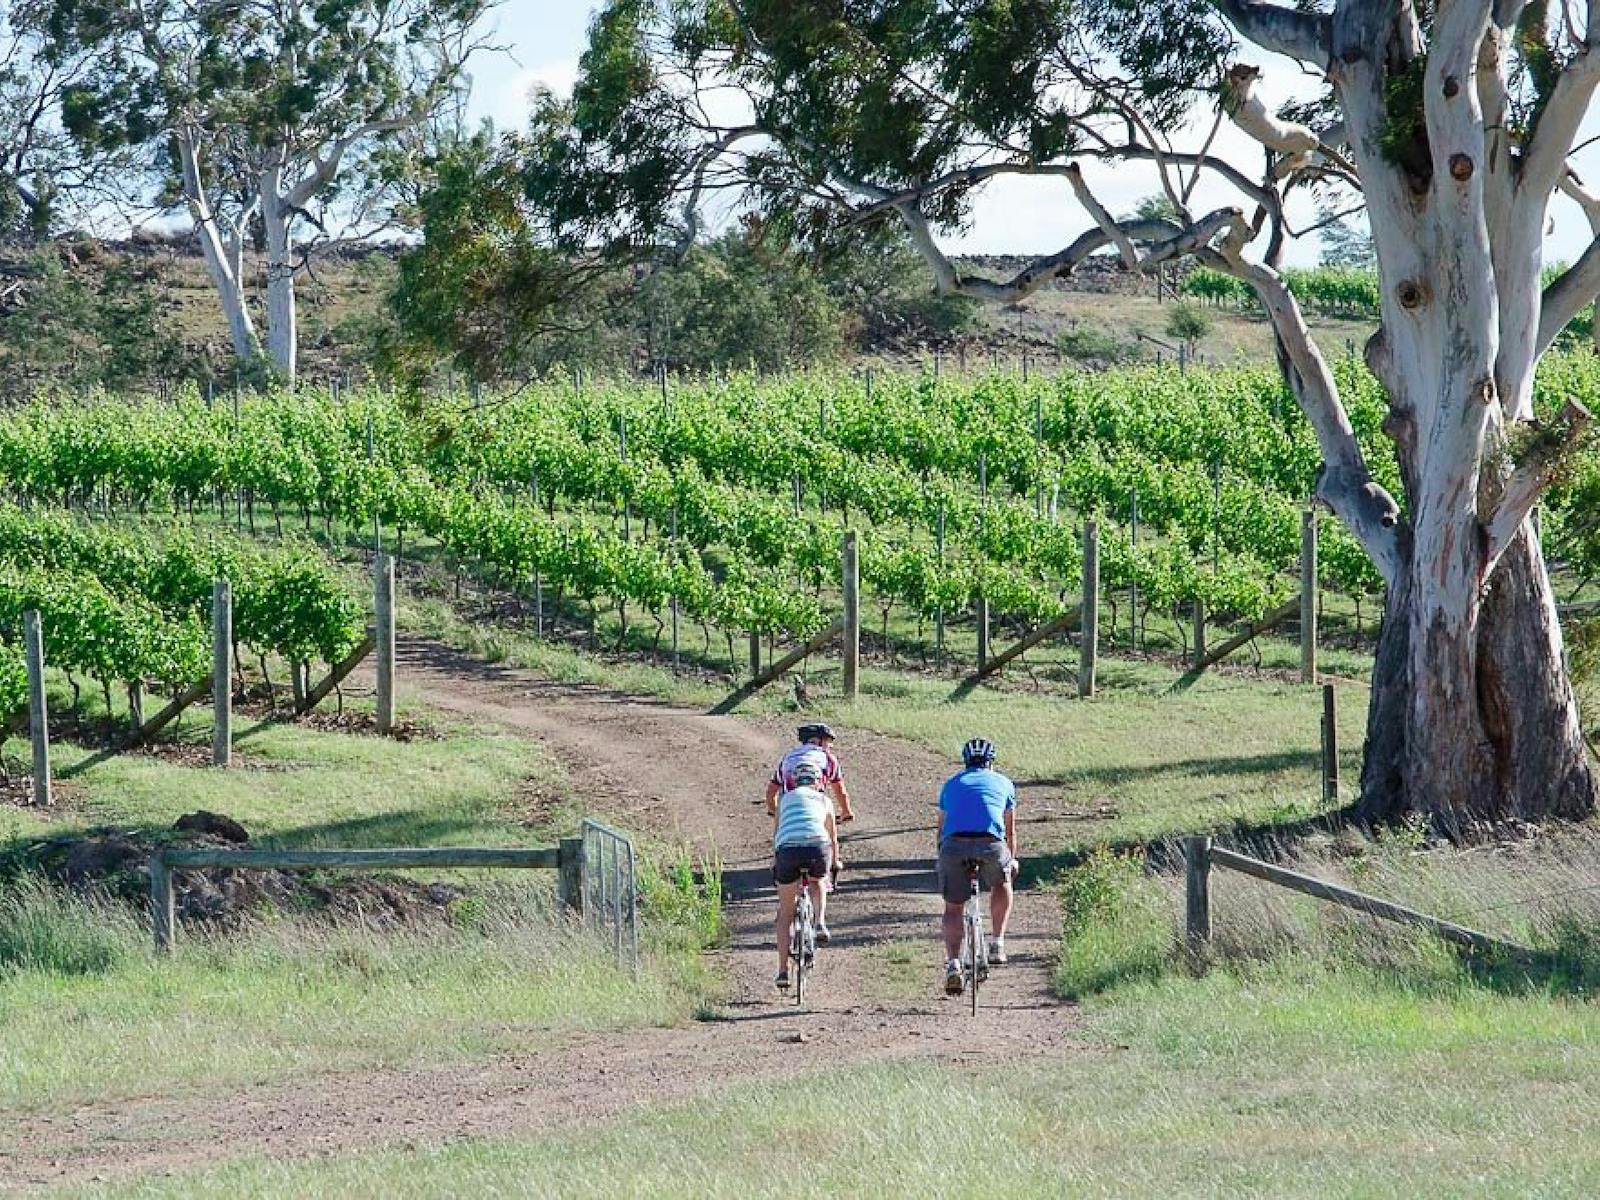 Riding along into road into vineyard